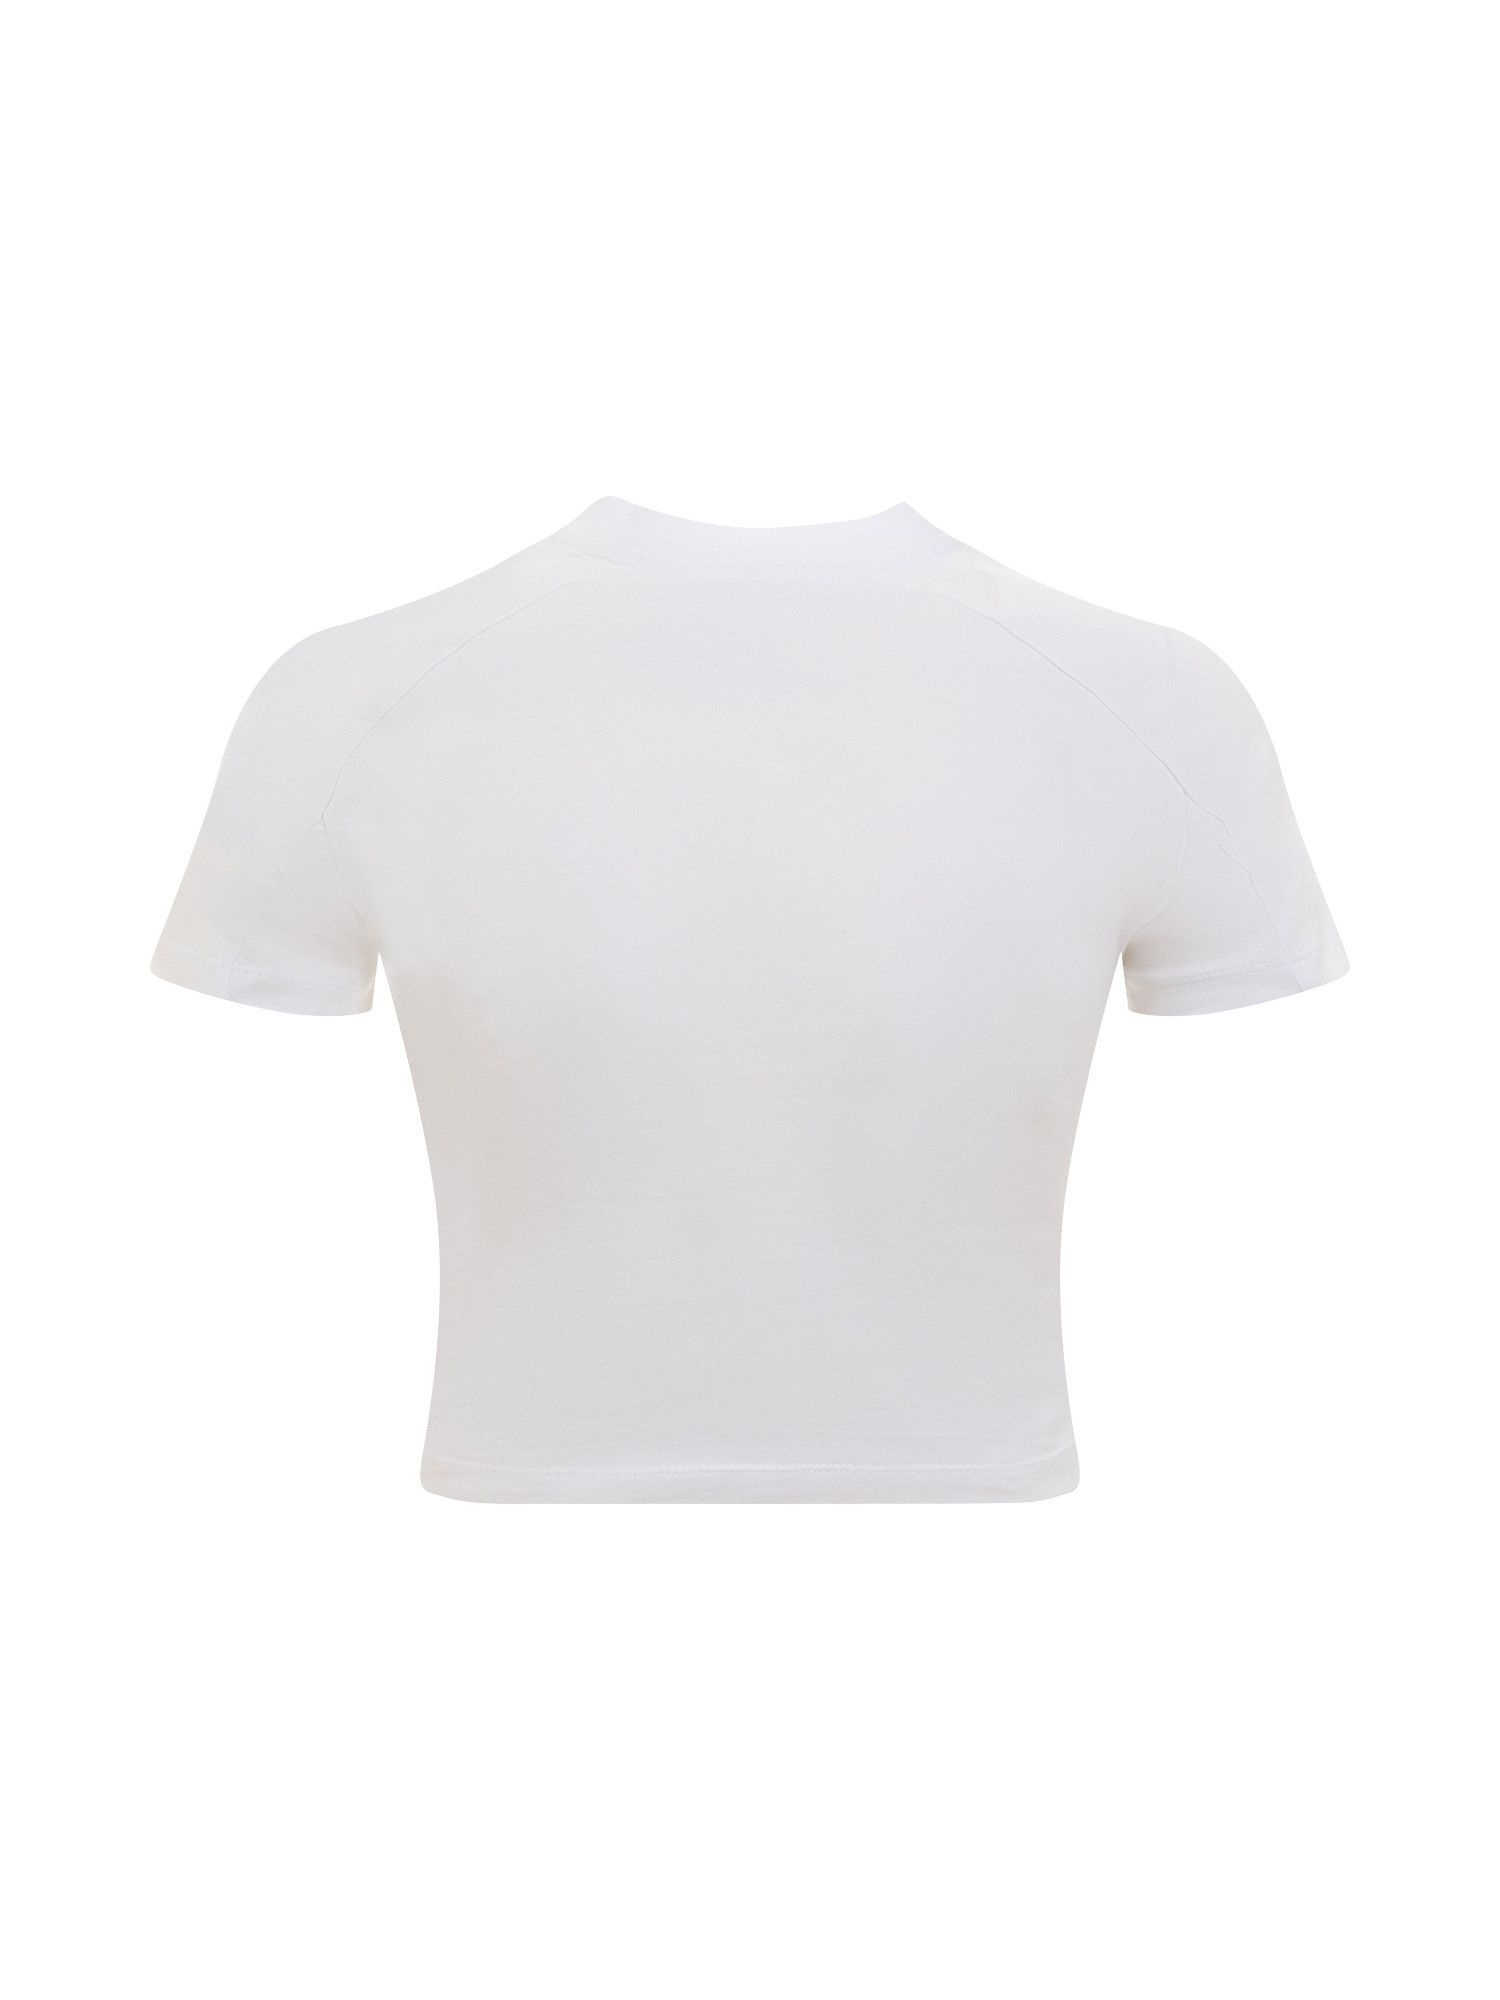 Chiara Ferragni - Cropped T-shirt with logo print, White, large image number 1